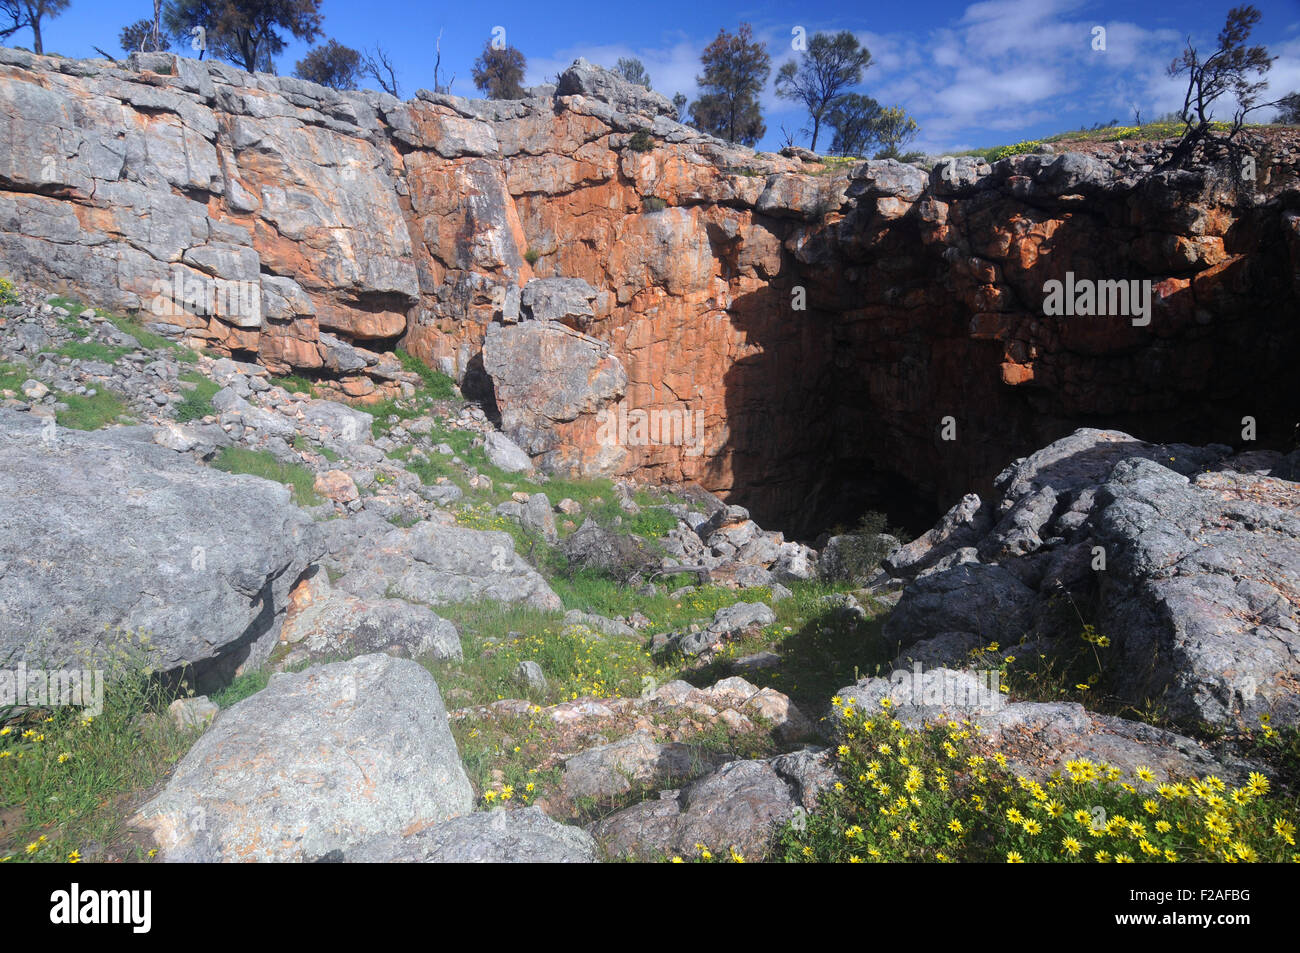 Jingamia (Jingemia) entrata della caverna, Watheroo National Park, regione di Wheatbelt, Australia occidentale Foto Stock